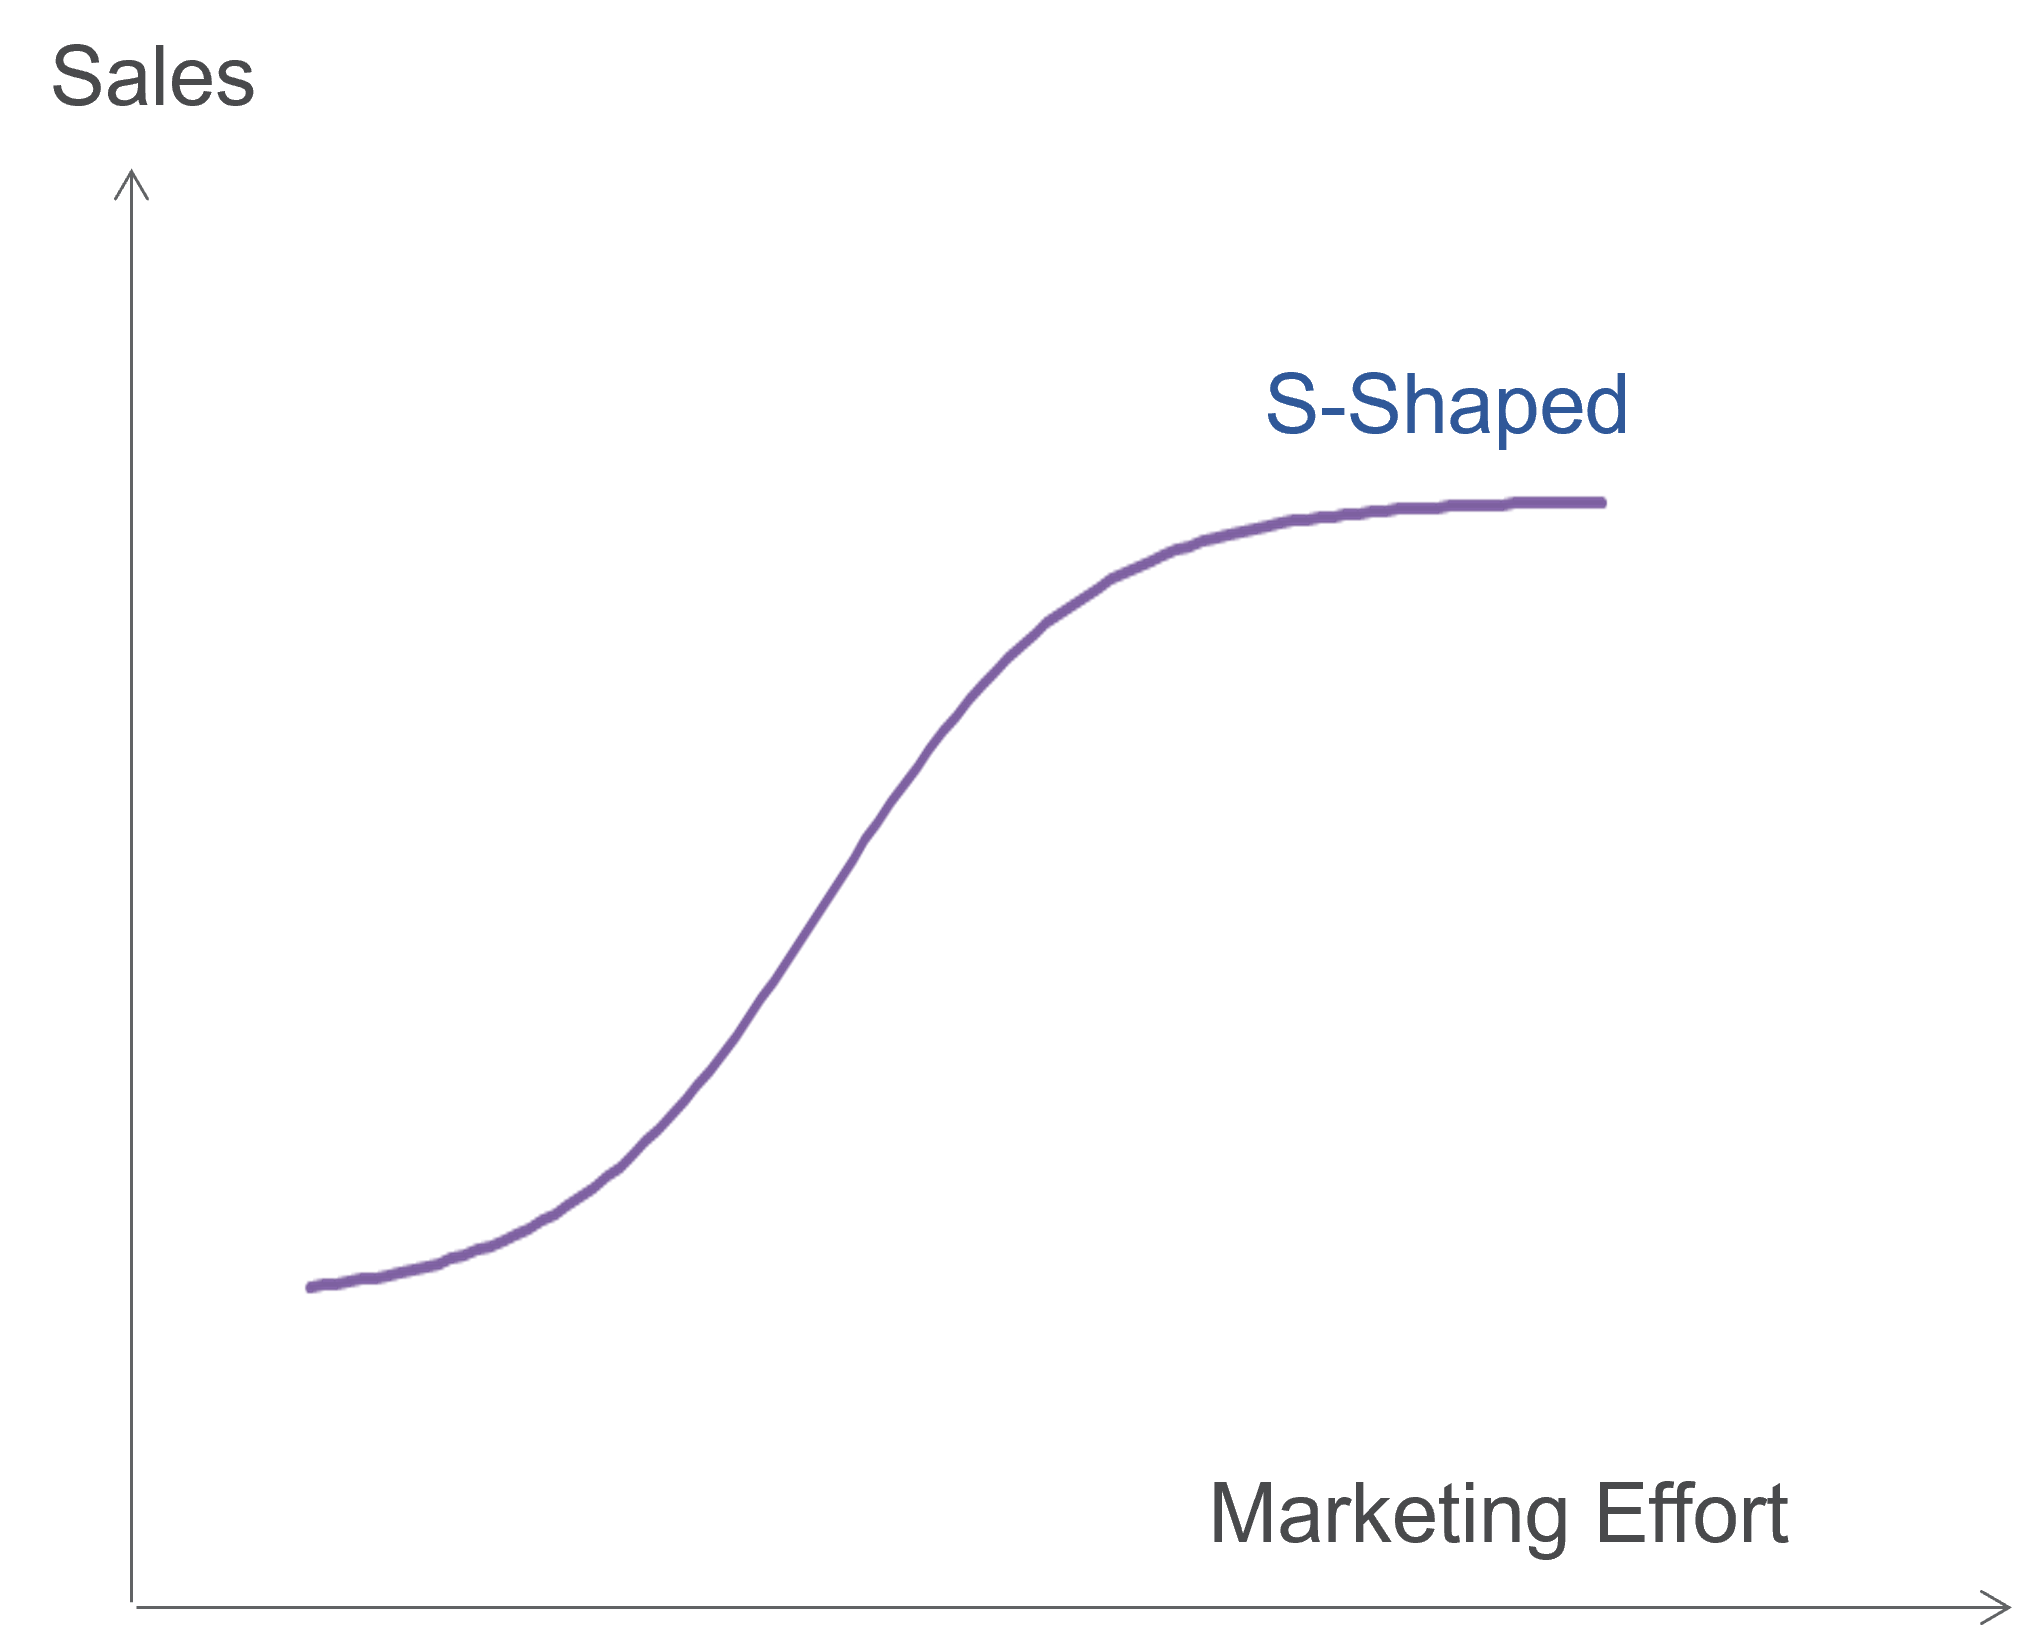 S-shaped Response Model - Sales Response Function — Marketing mix Modelling